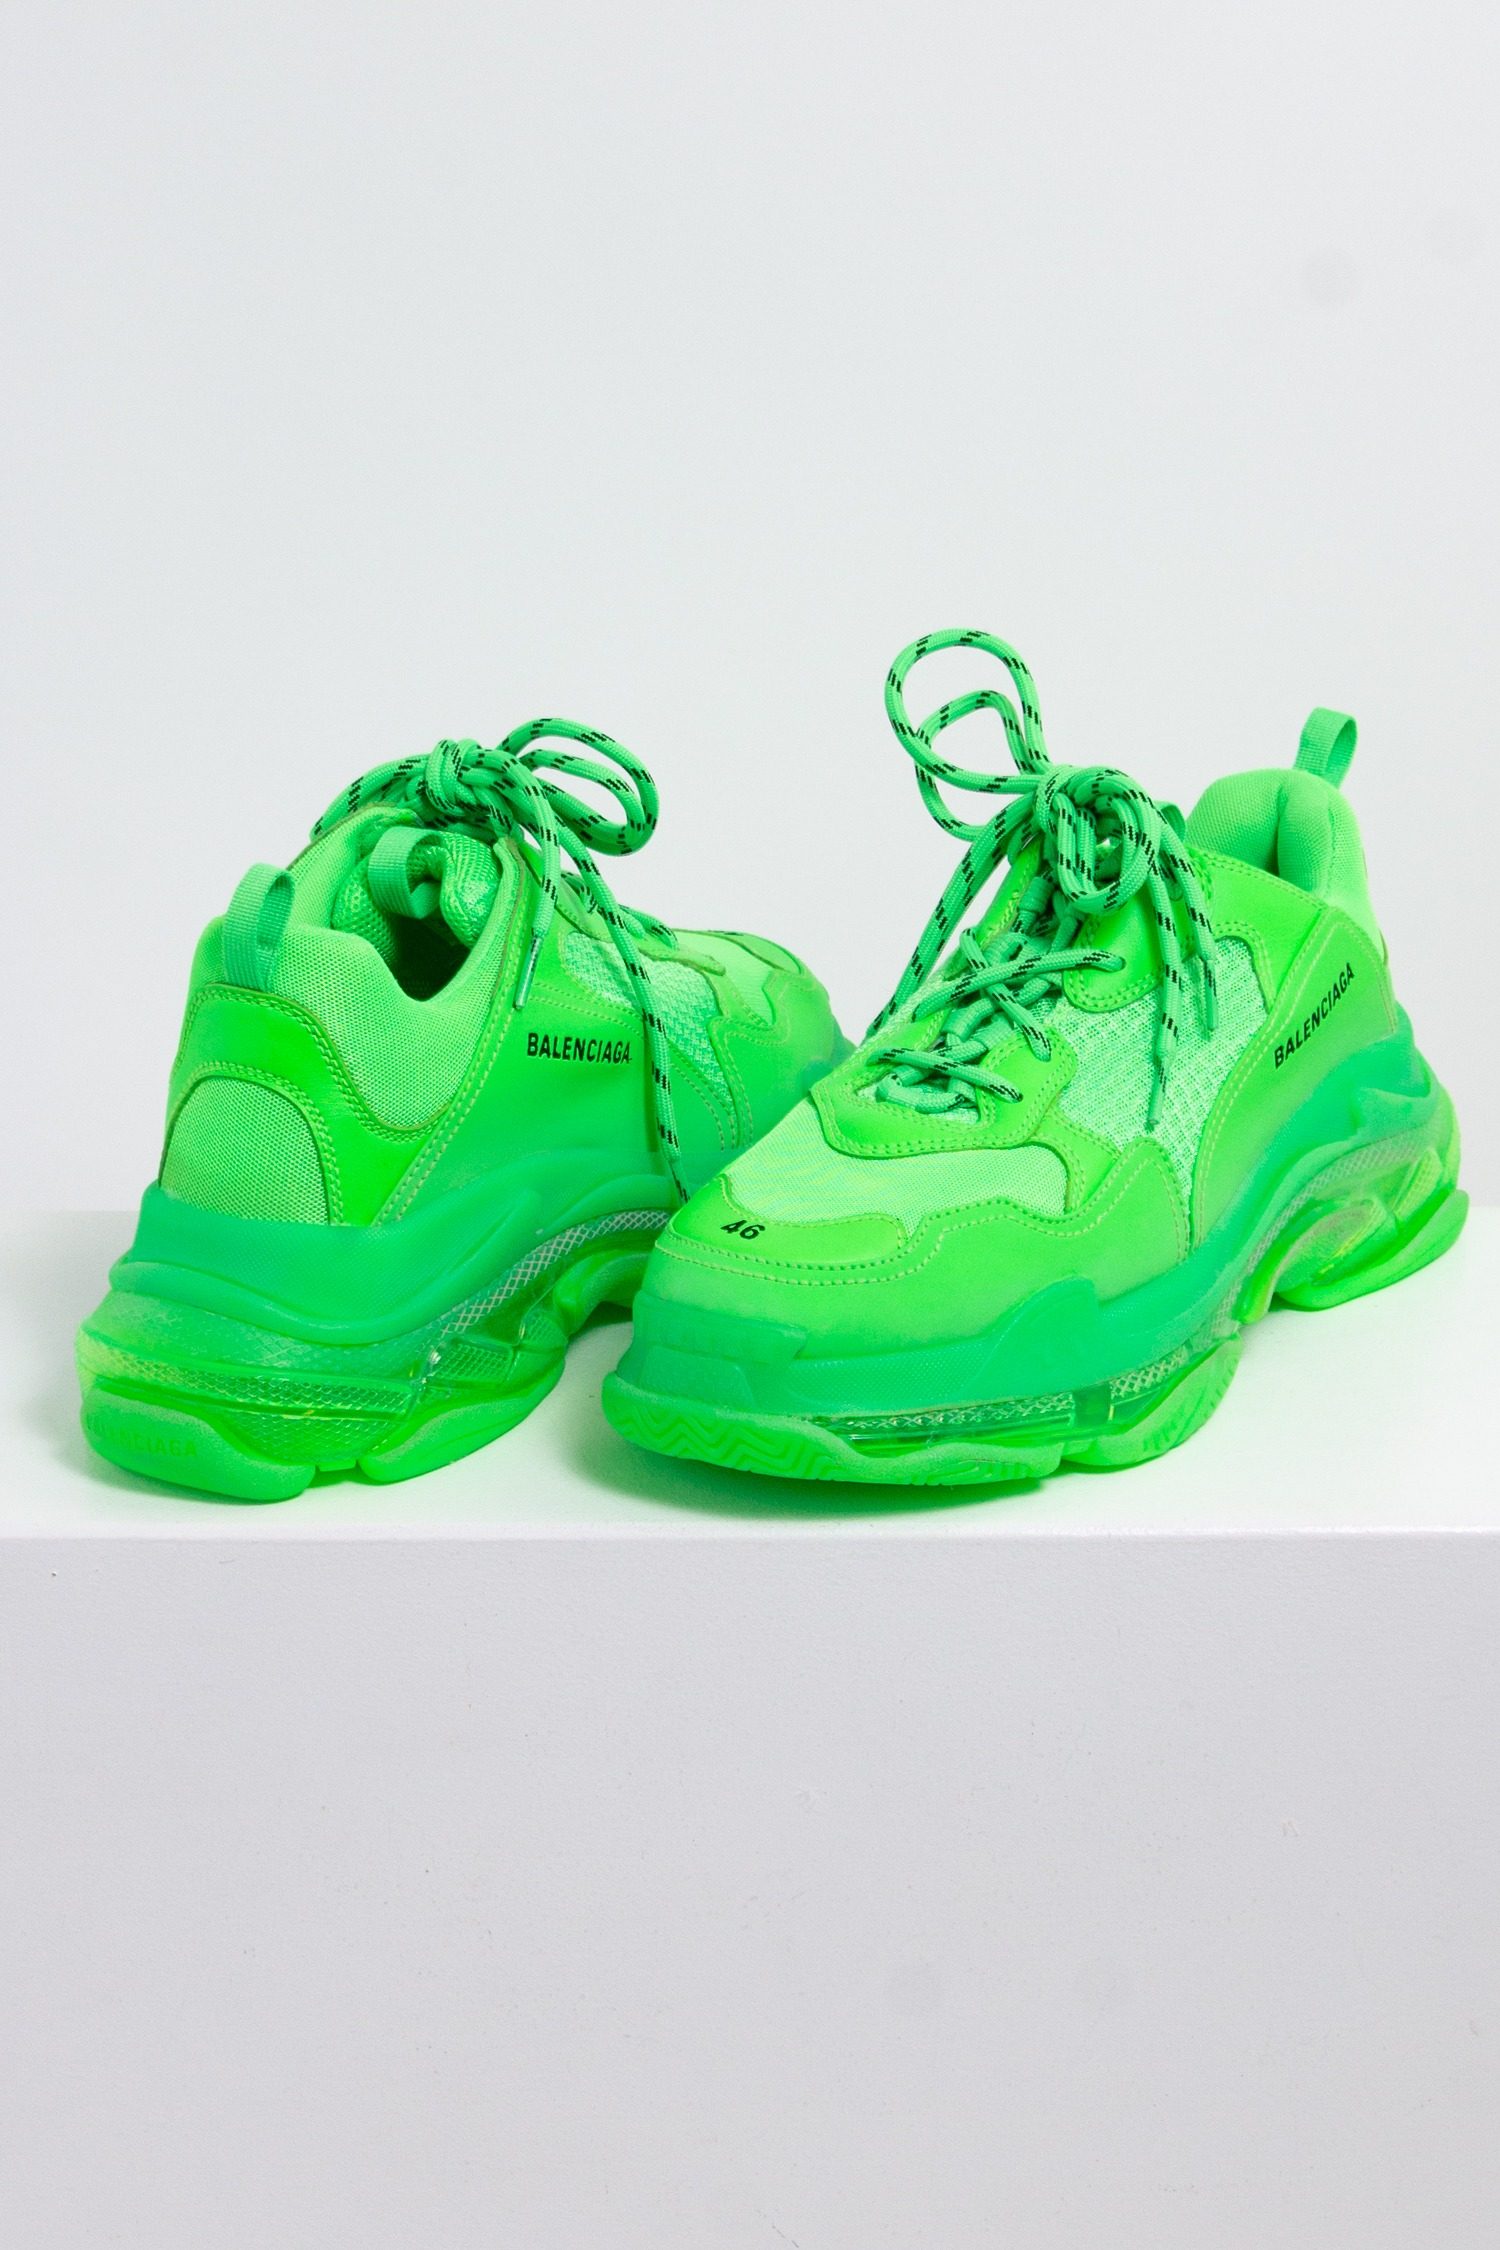 Balenciaga "Triple S" Sneaker in strahlendem grün